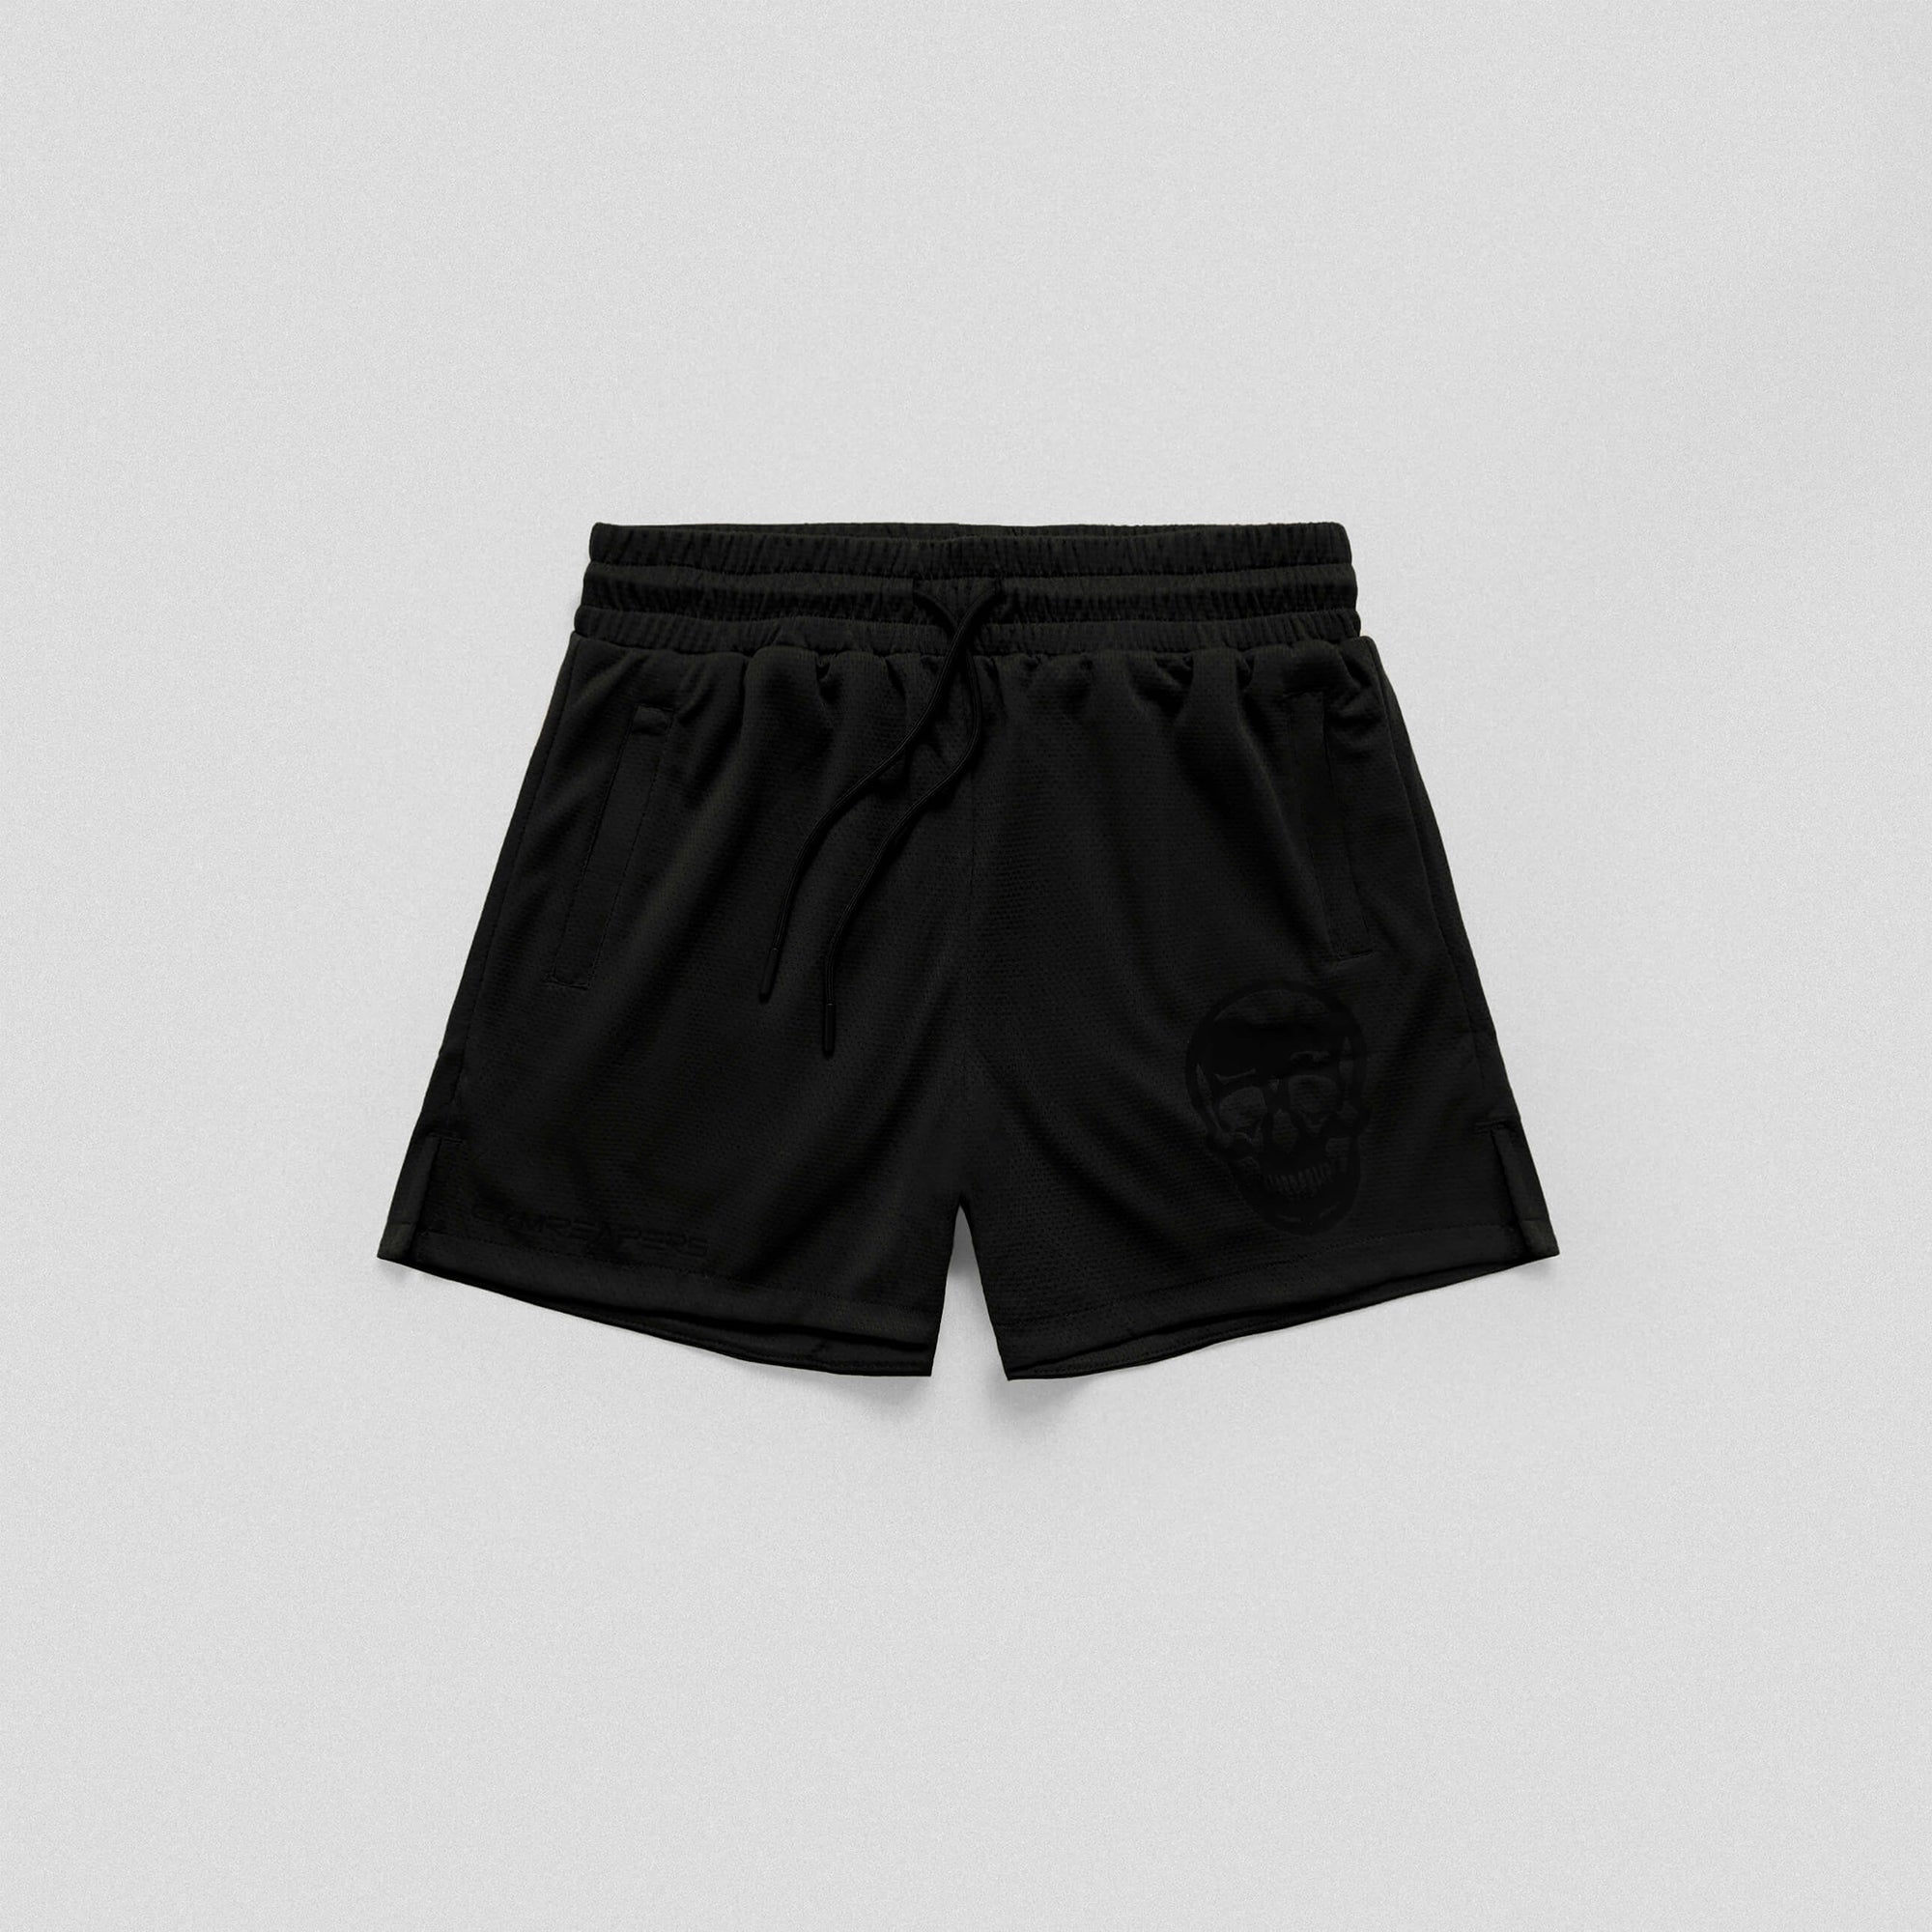 mesh shorts black black front